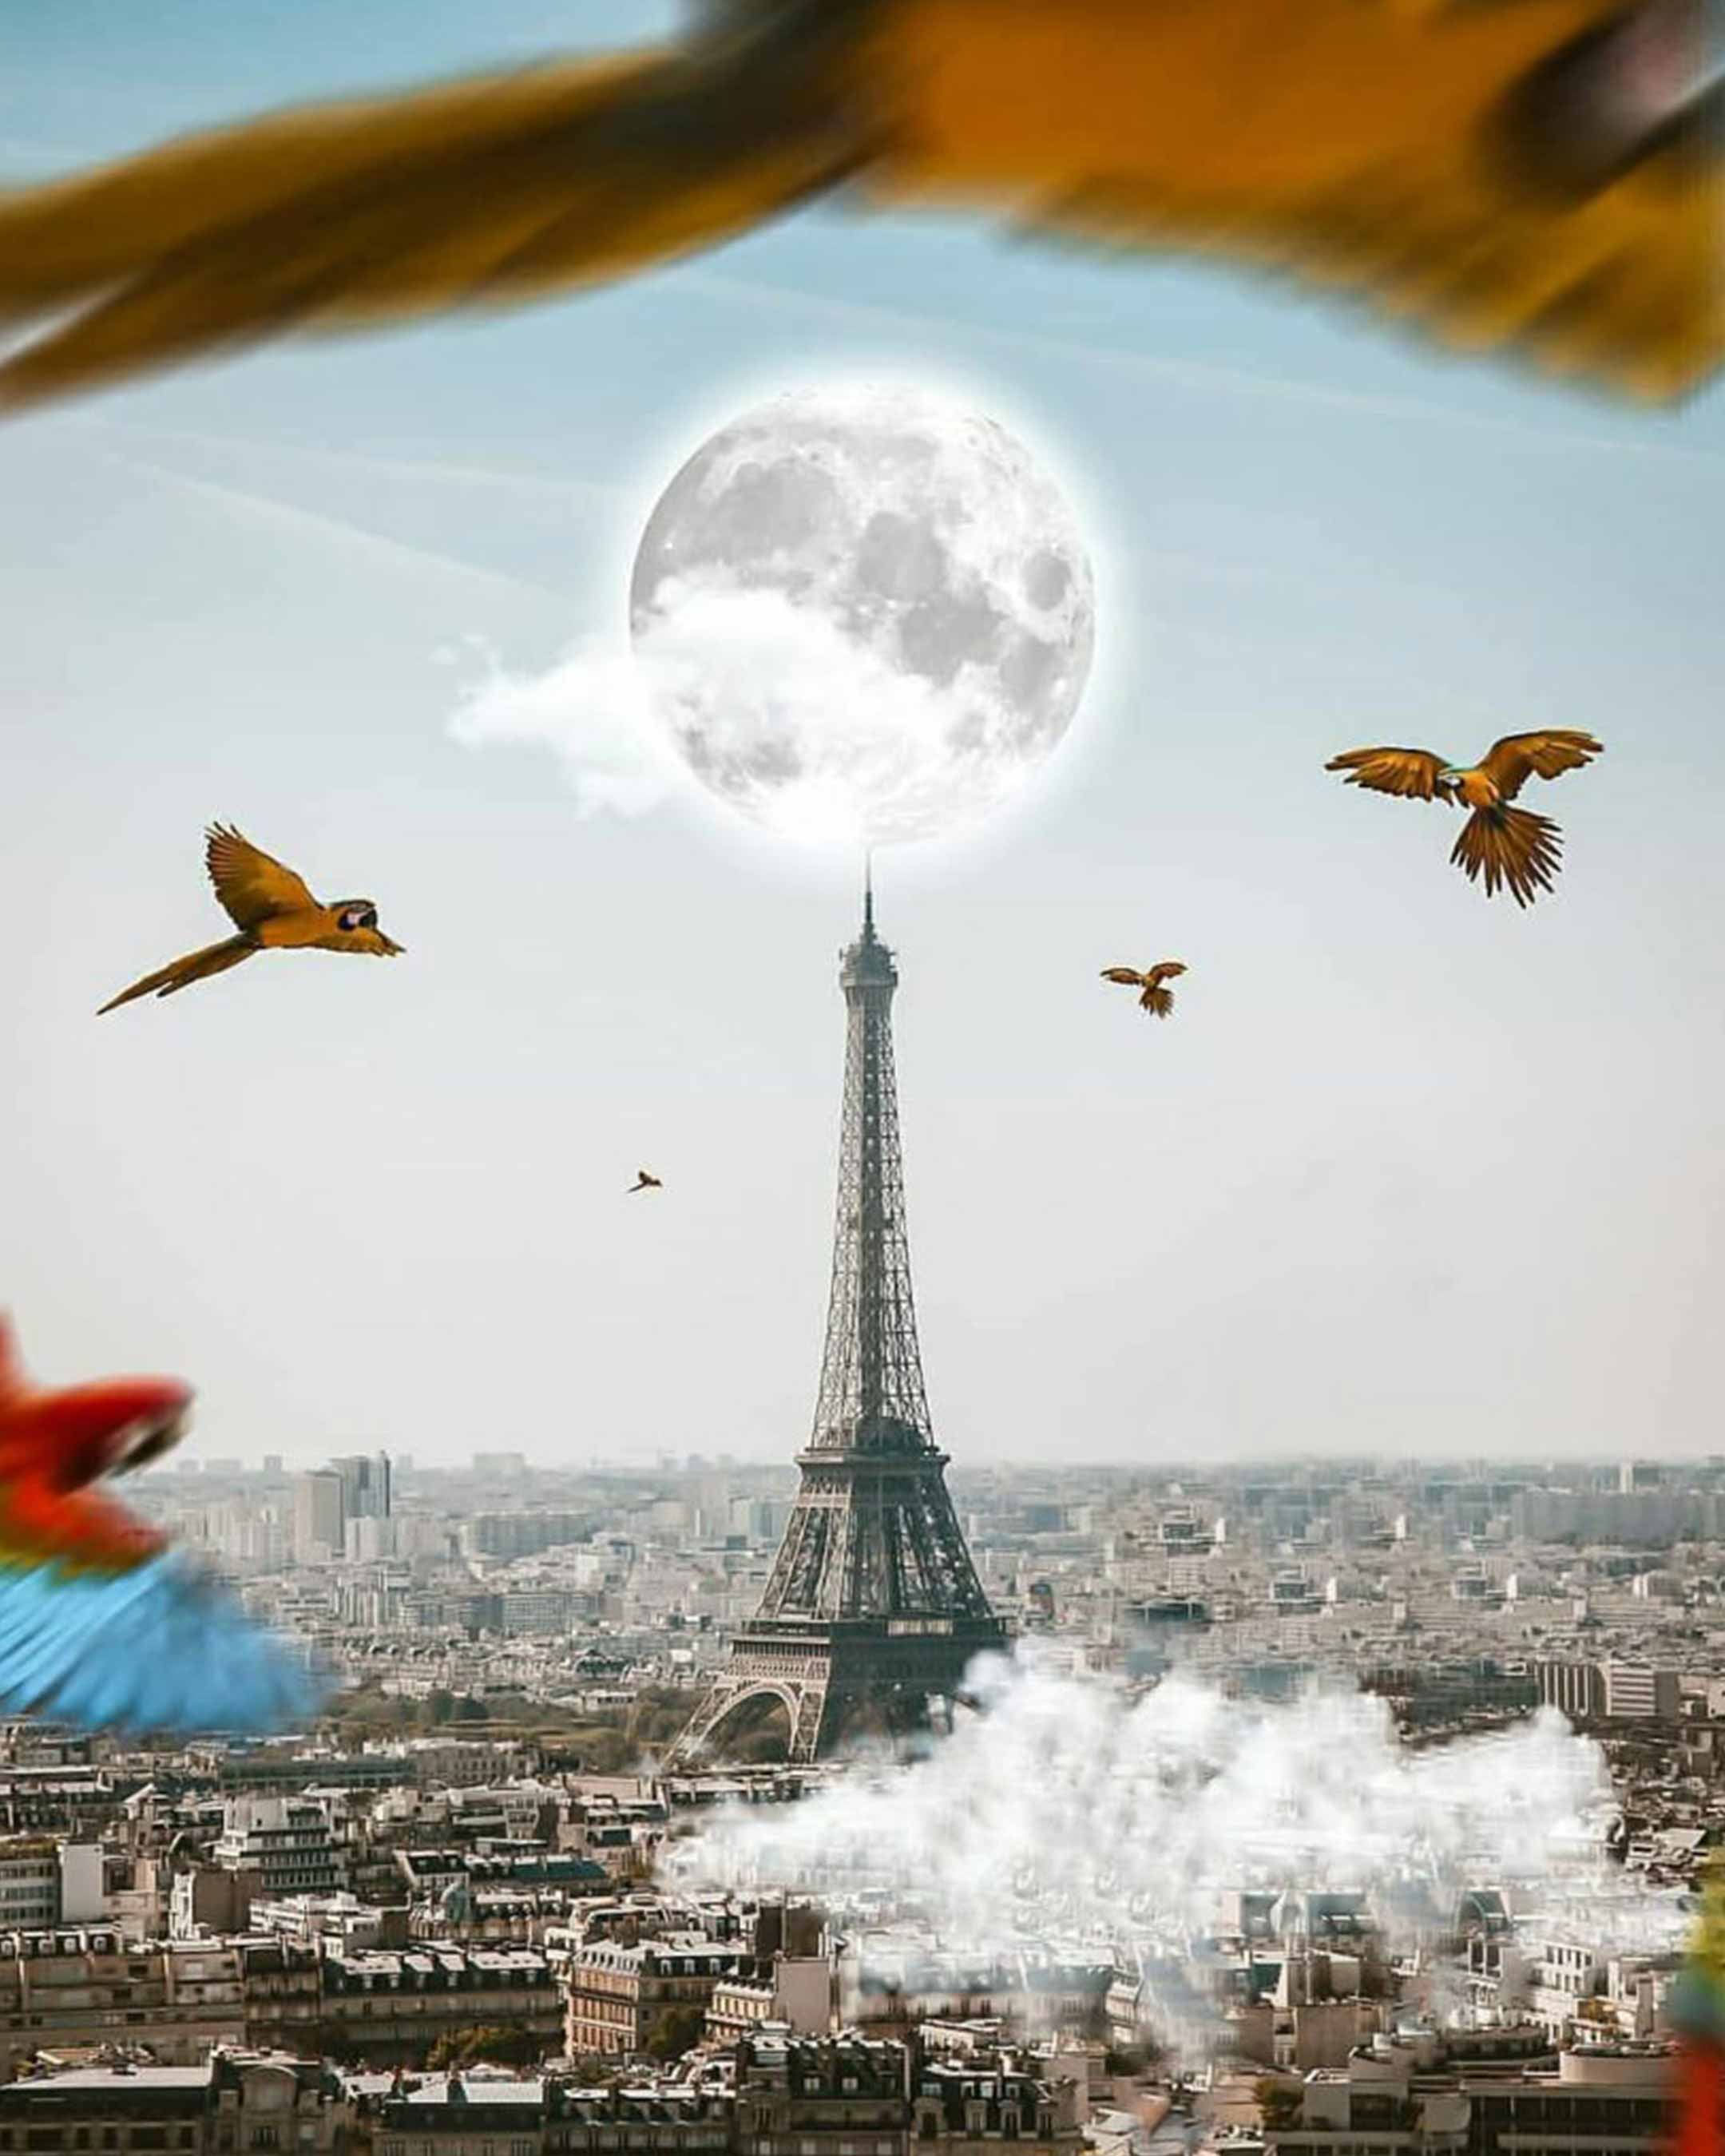 Eiffel Tower Photo Editing Background Free Stock Image